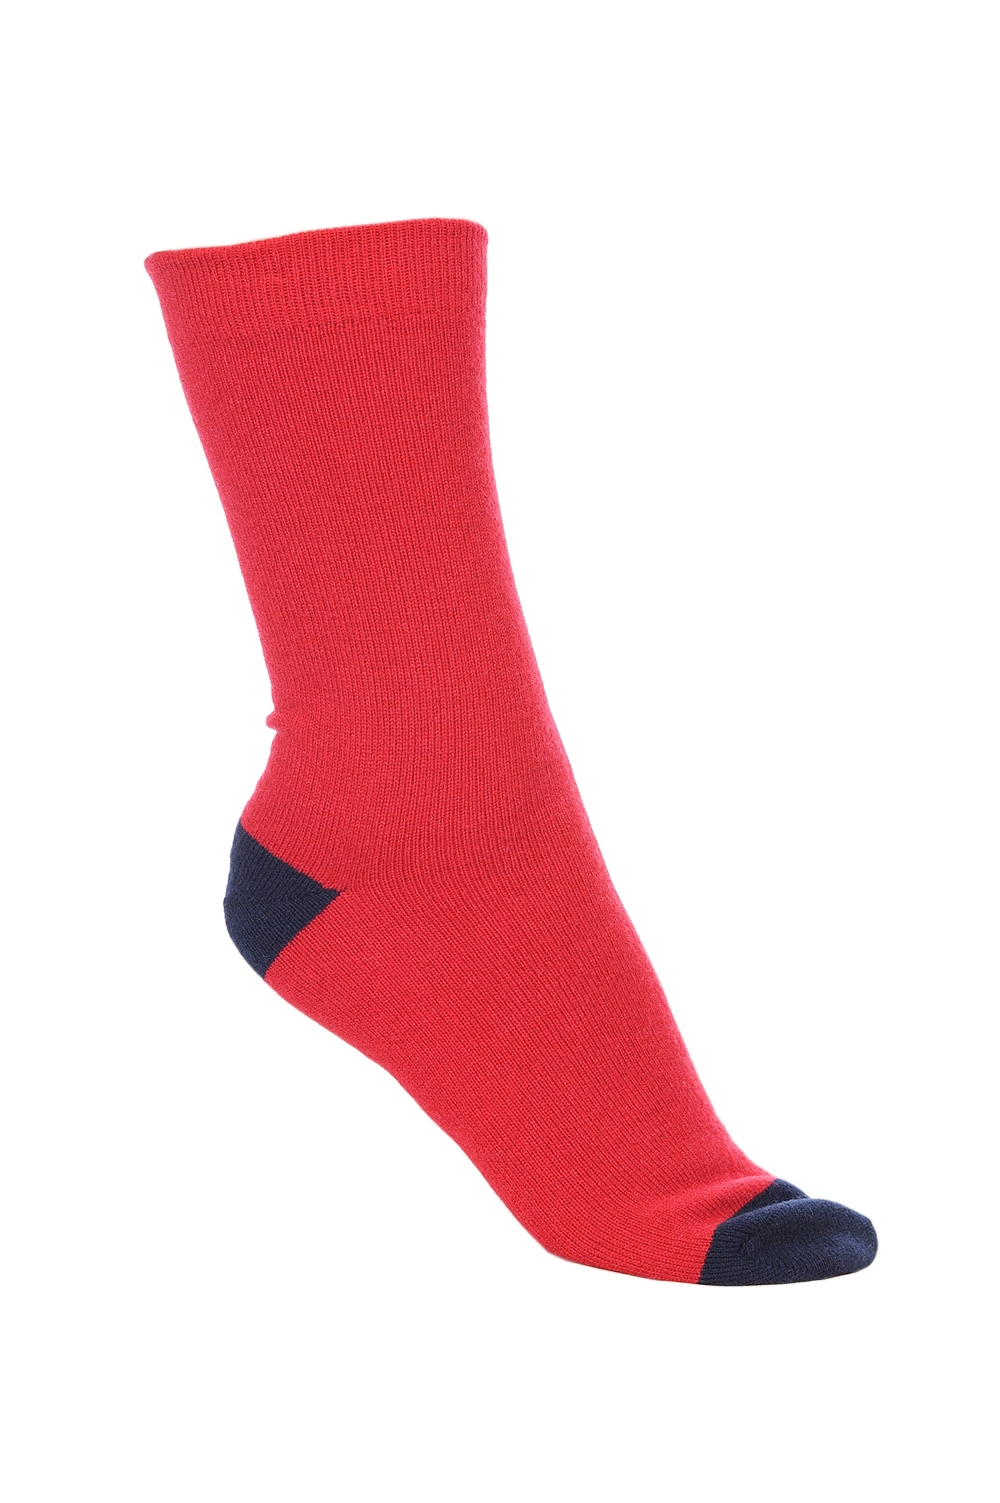 Cashmere & Elastane accessories socks frontibus blood red dress blue 5 5 8 39 42 